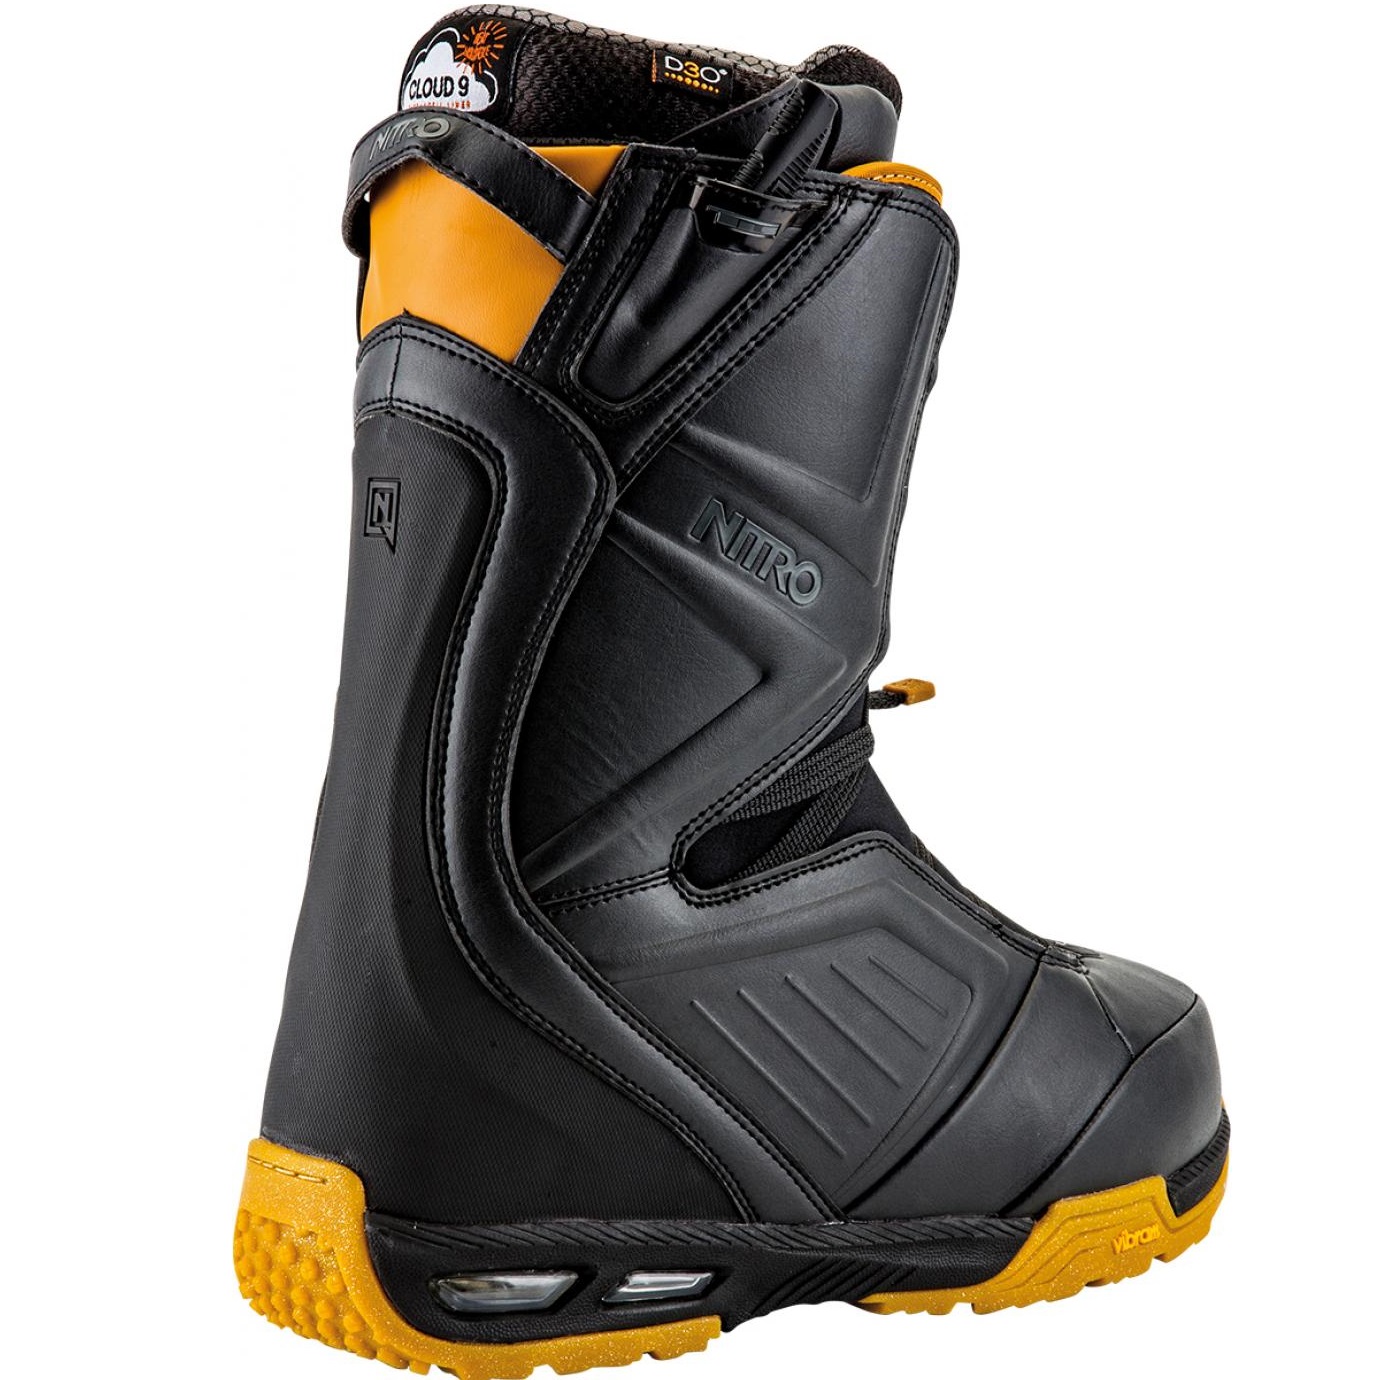 Boots de snowboard occasion Nitro rental noir 